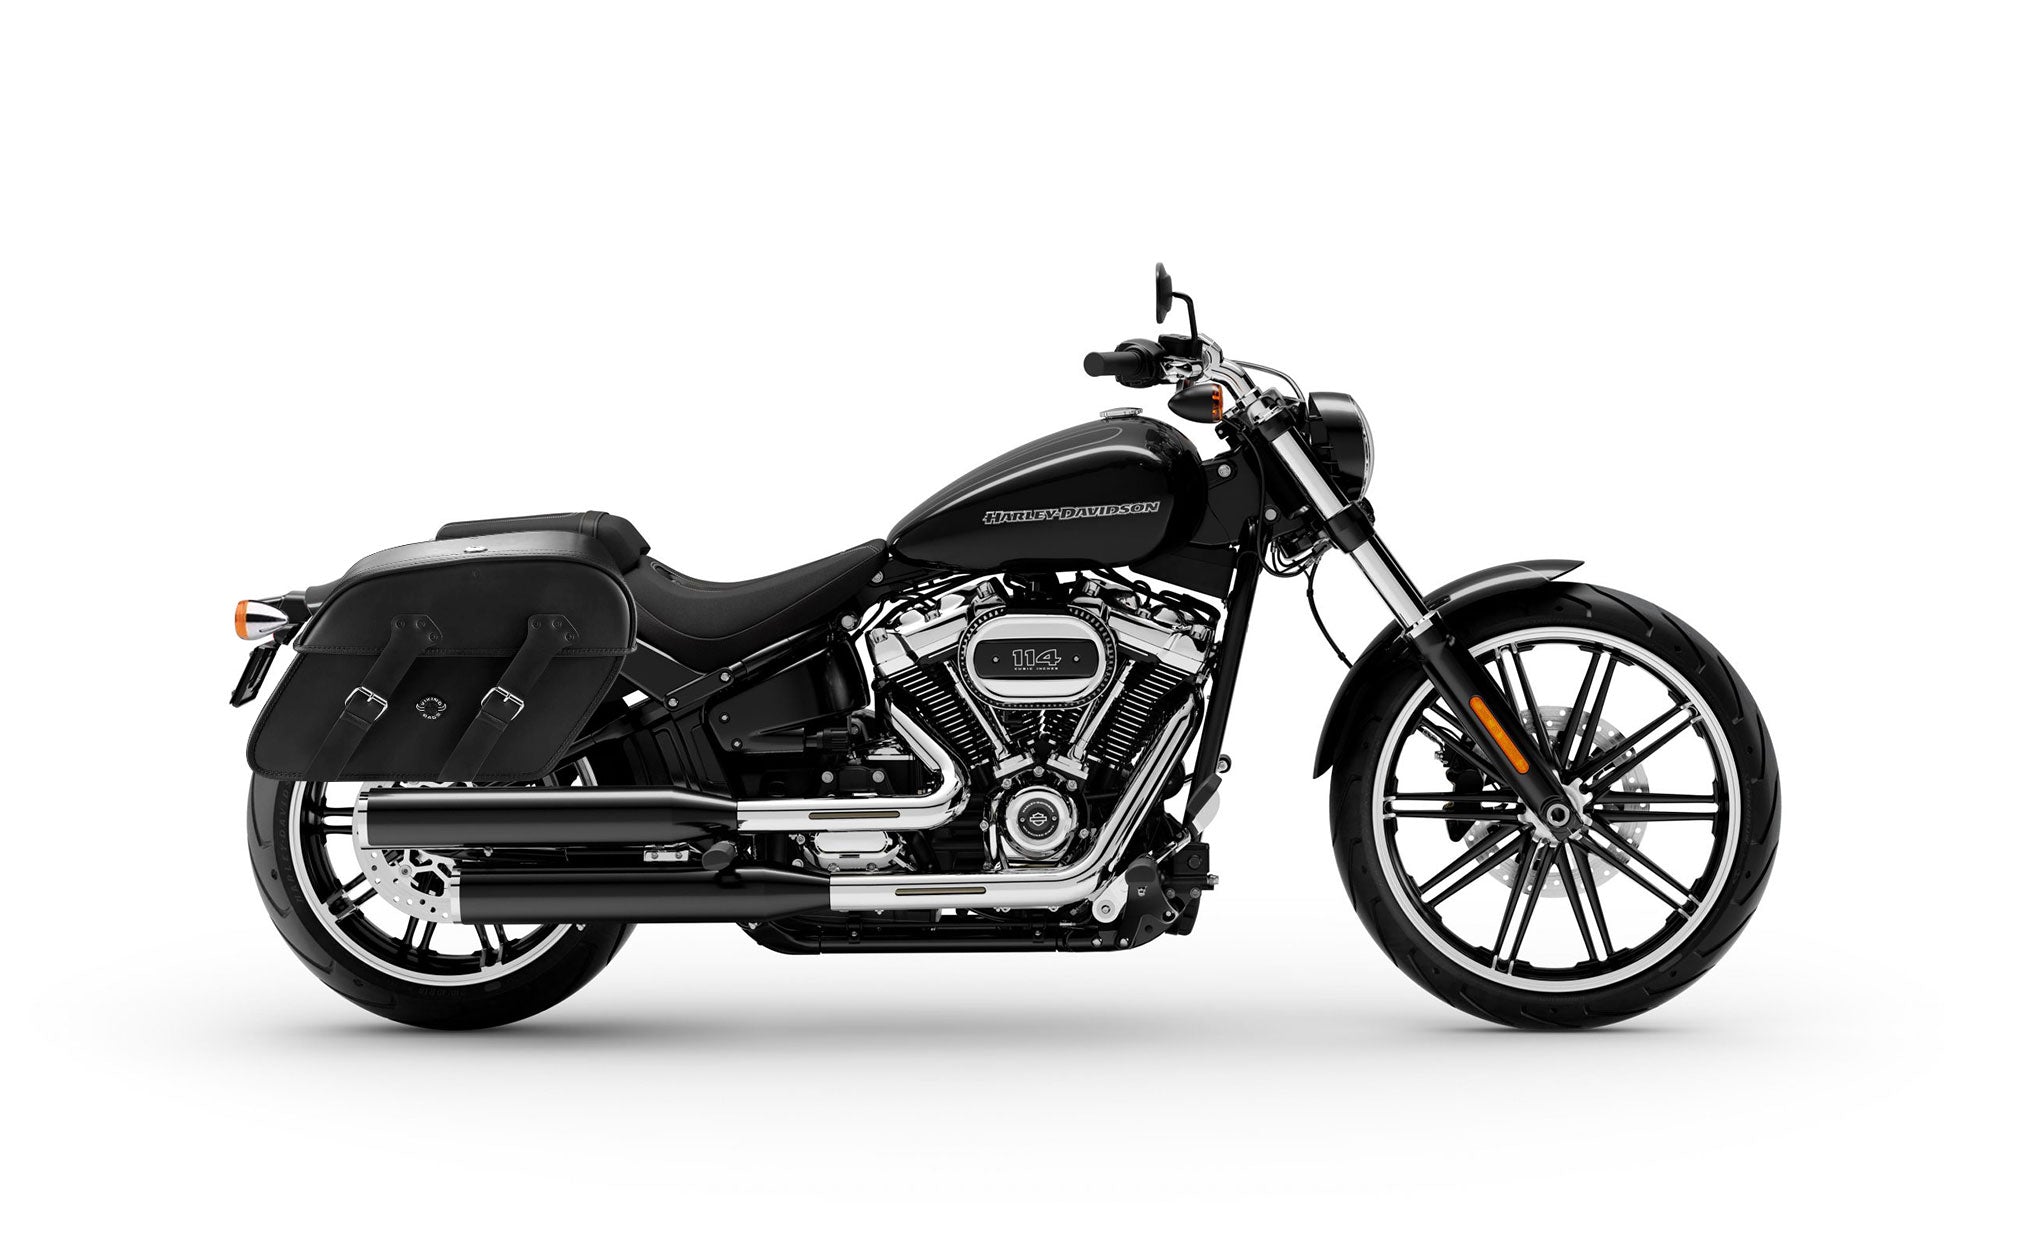 Viking Raven Extra Large Leather Motorcycle Saddlebags For Harley Softail Breakout 114 Fxbr S on Bike Photo @expand